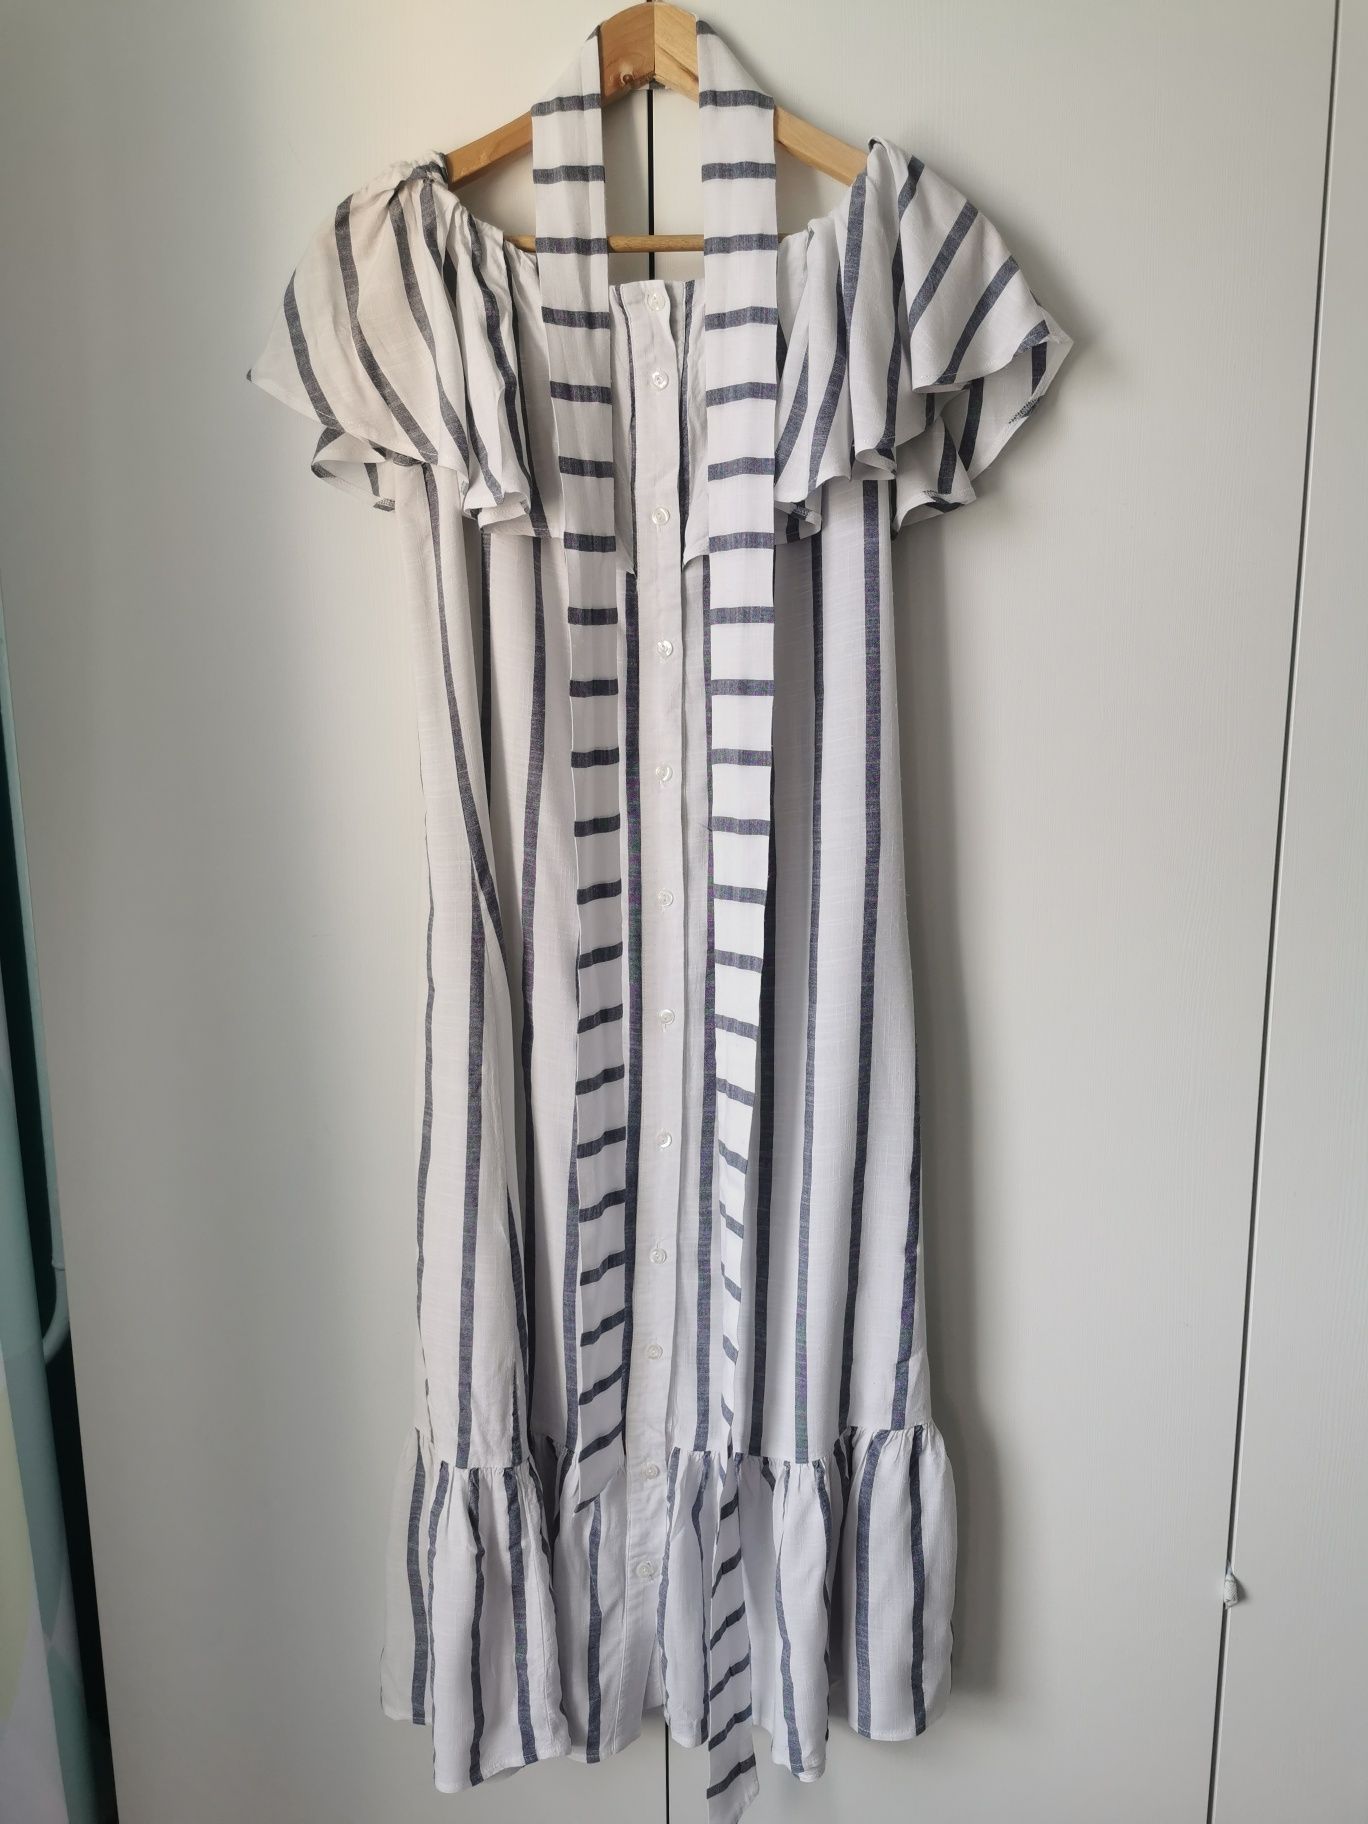 Tiffi sukienka na lato 36 S bawełna w pasy hiszpanka